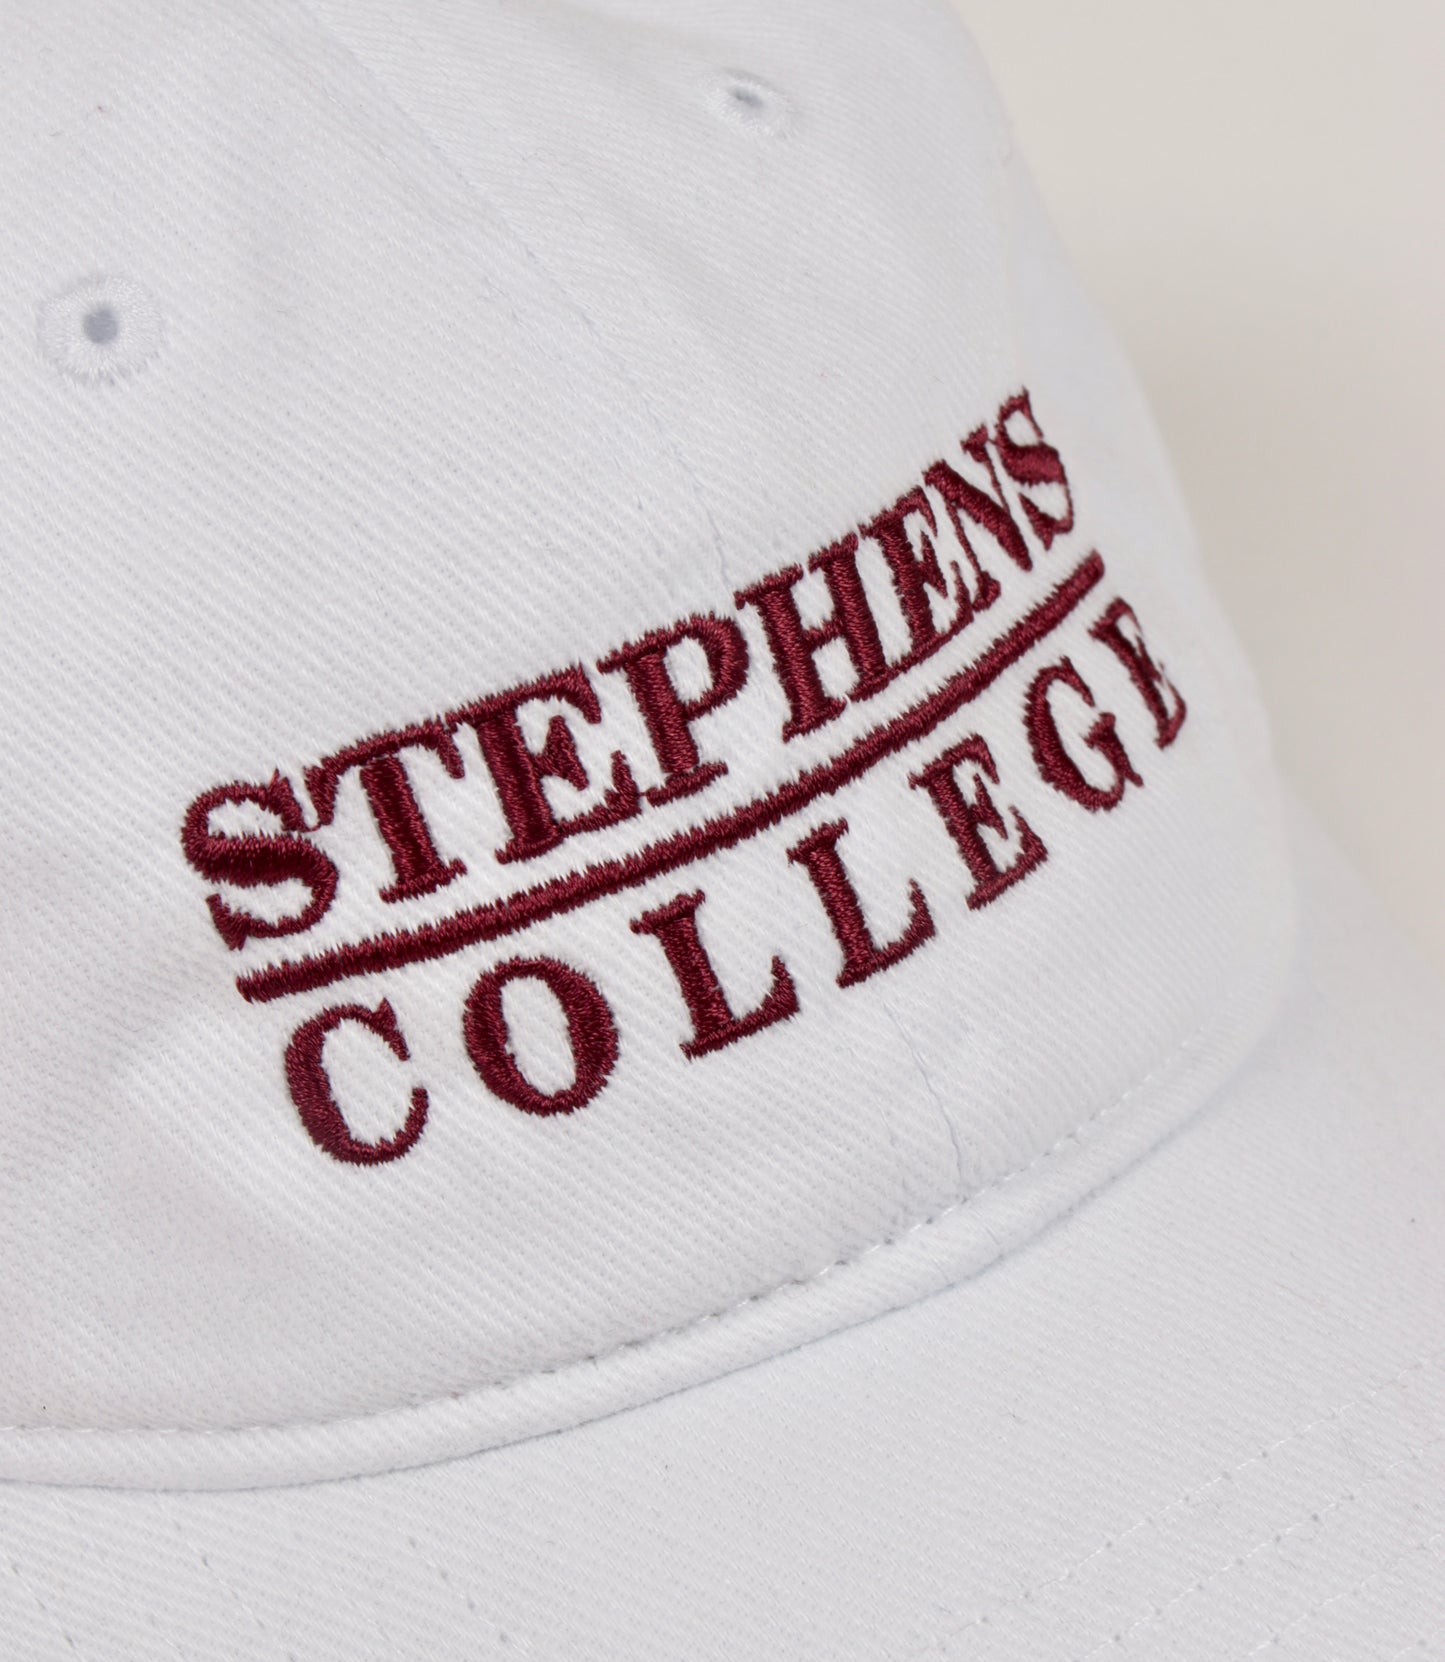 Stephens College Hat